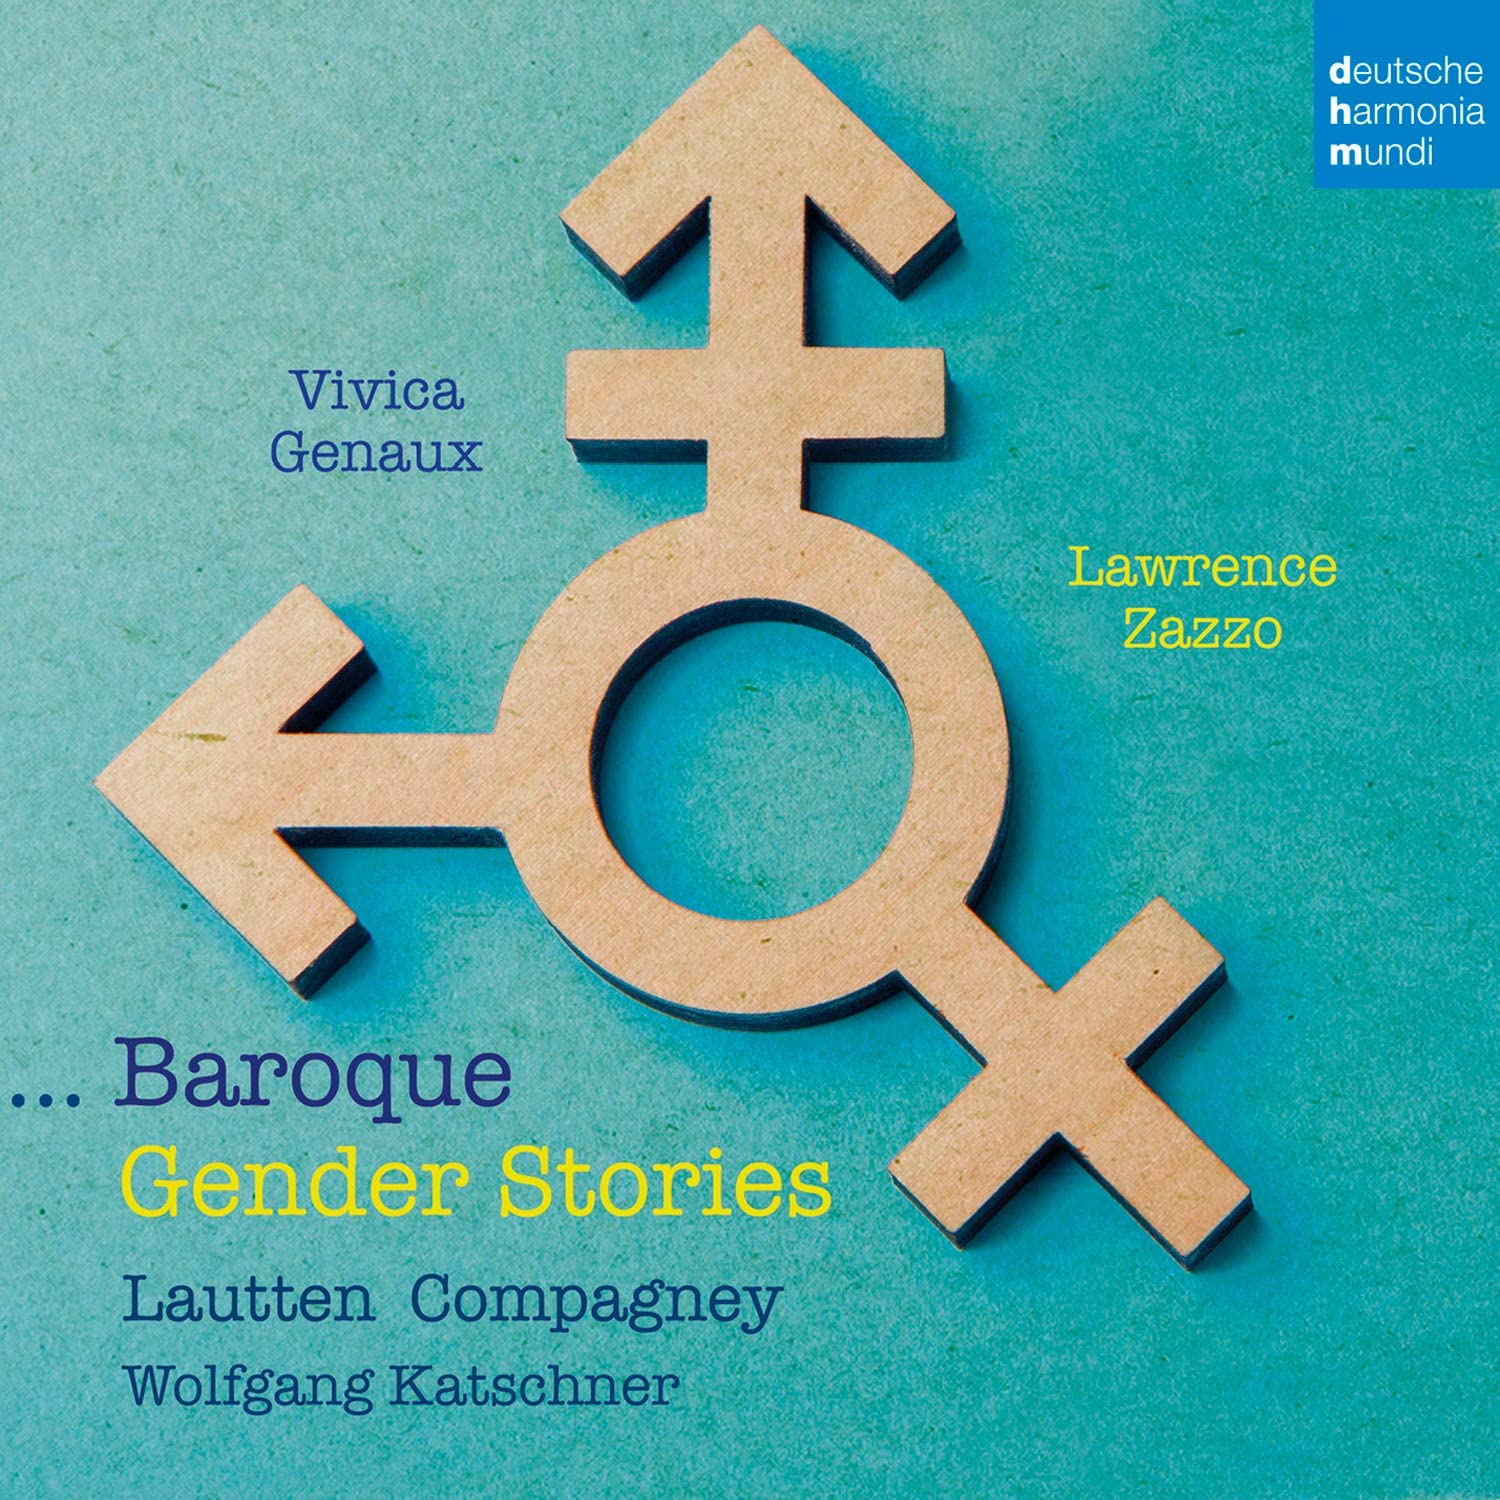 Baroque Gender Studies CD cover